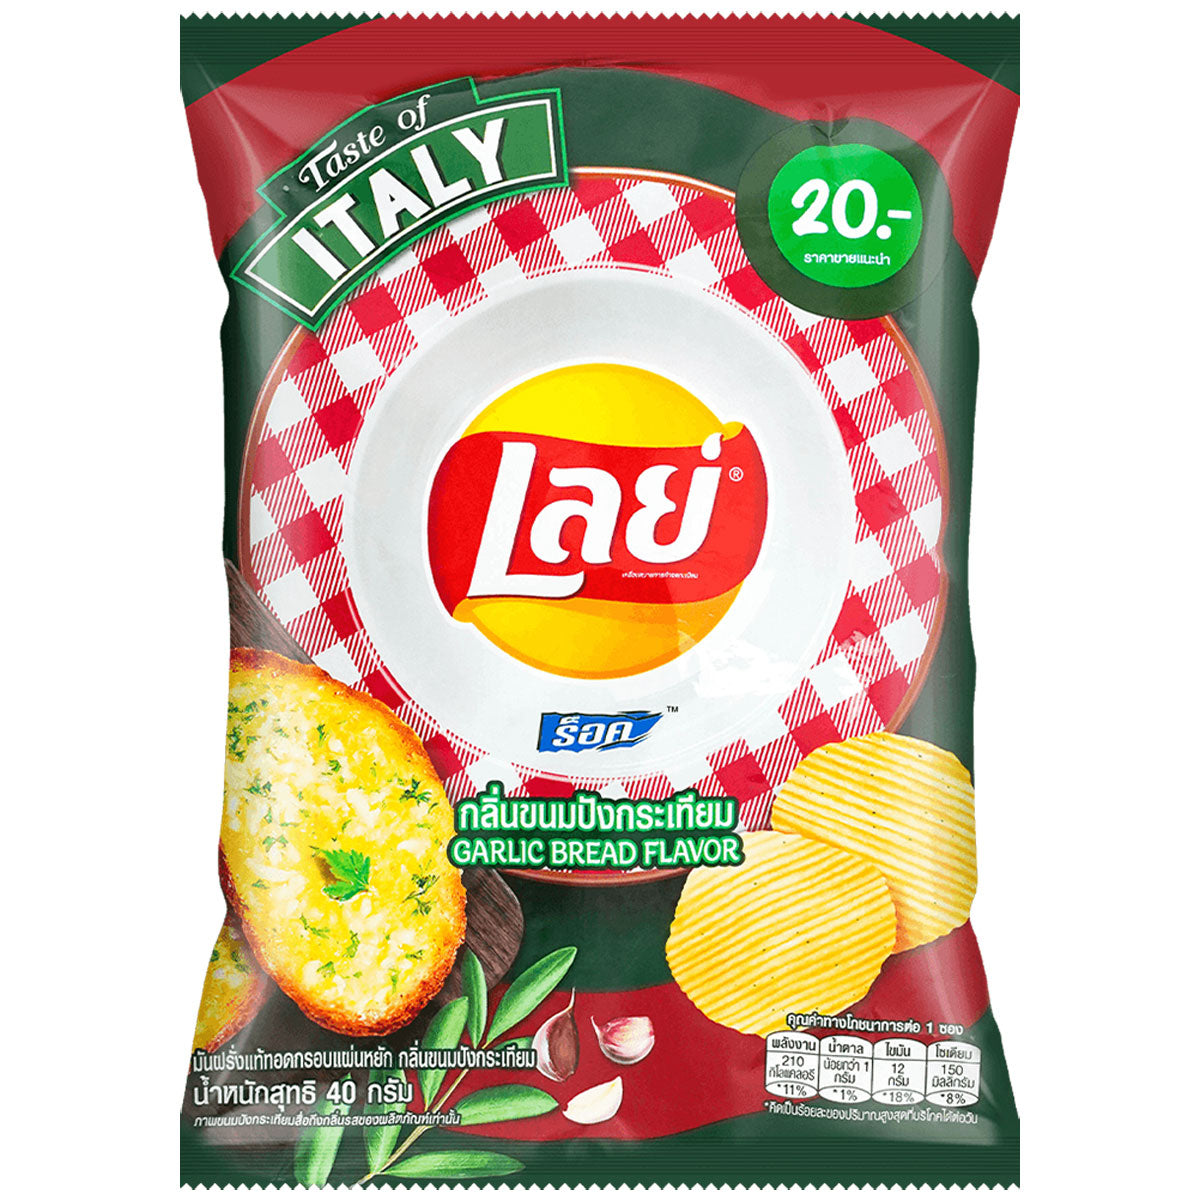 Lay's Potato Chips Garlic Bread Flavor - 1.41oz